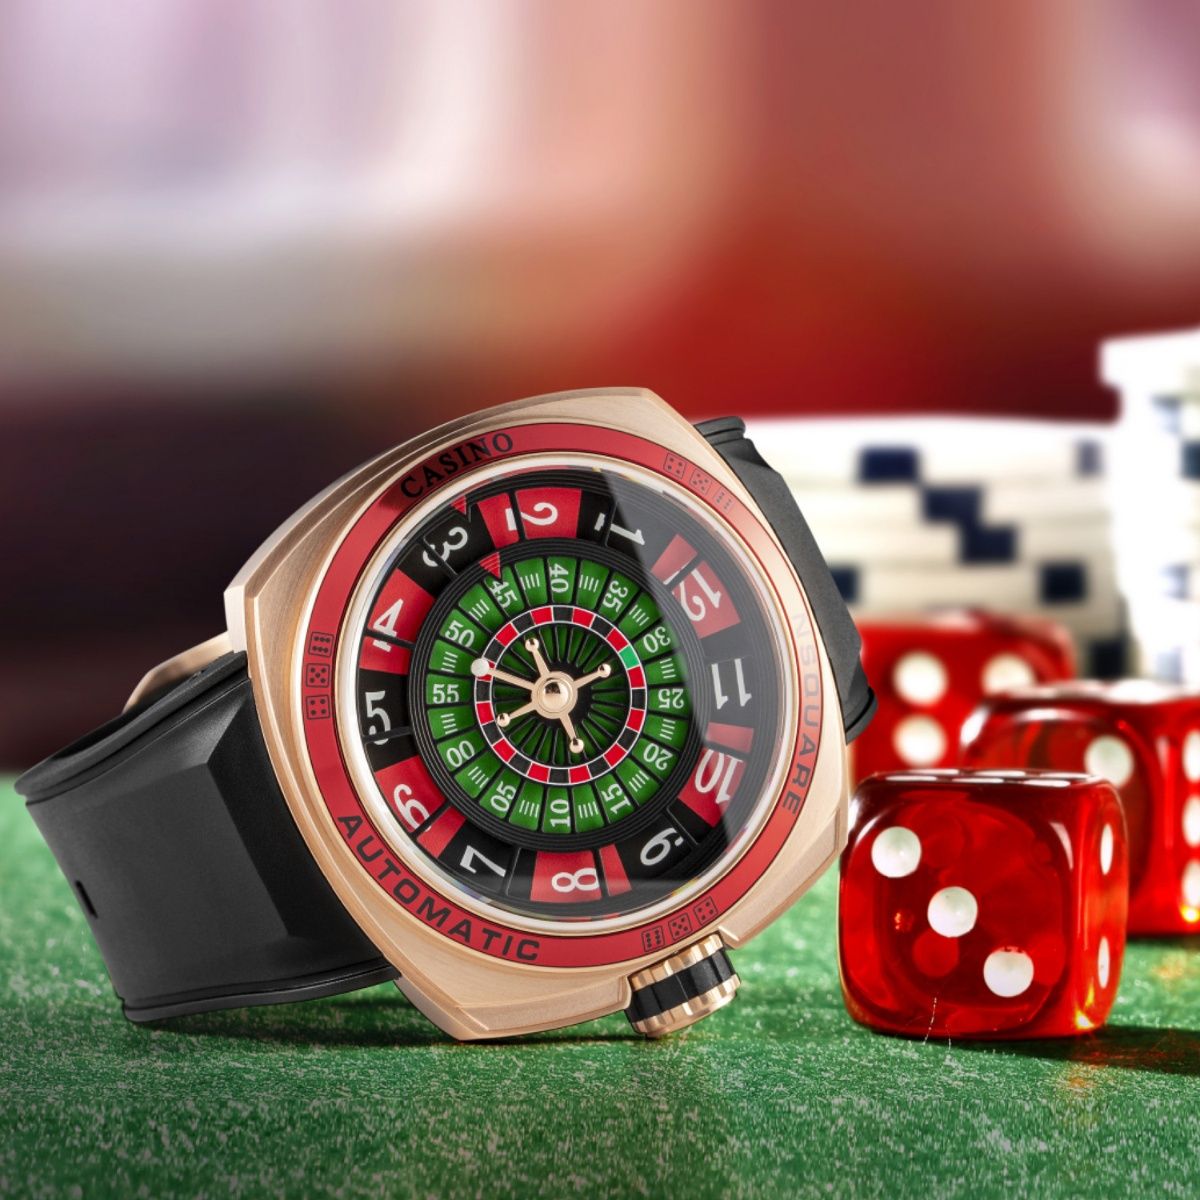 Wheel of Fortune: Jacob & Co.'s Astronomia Casino Watch - JCK